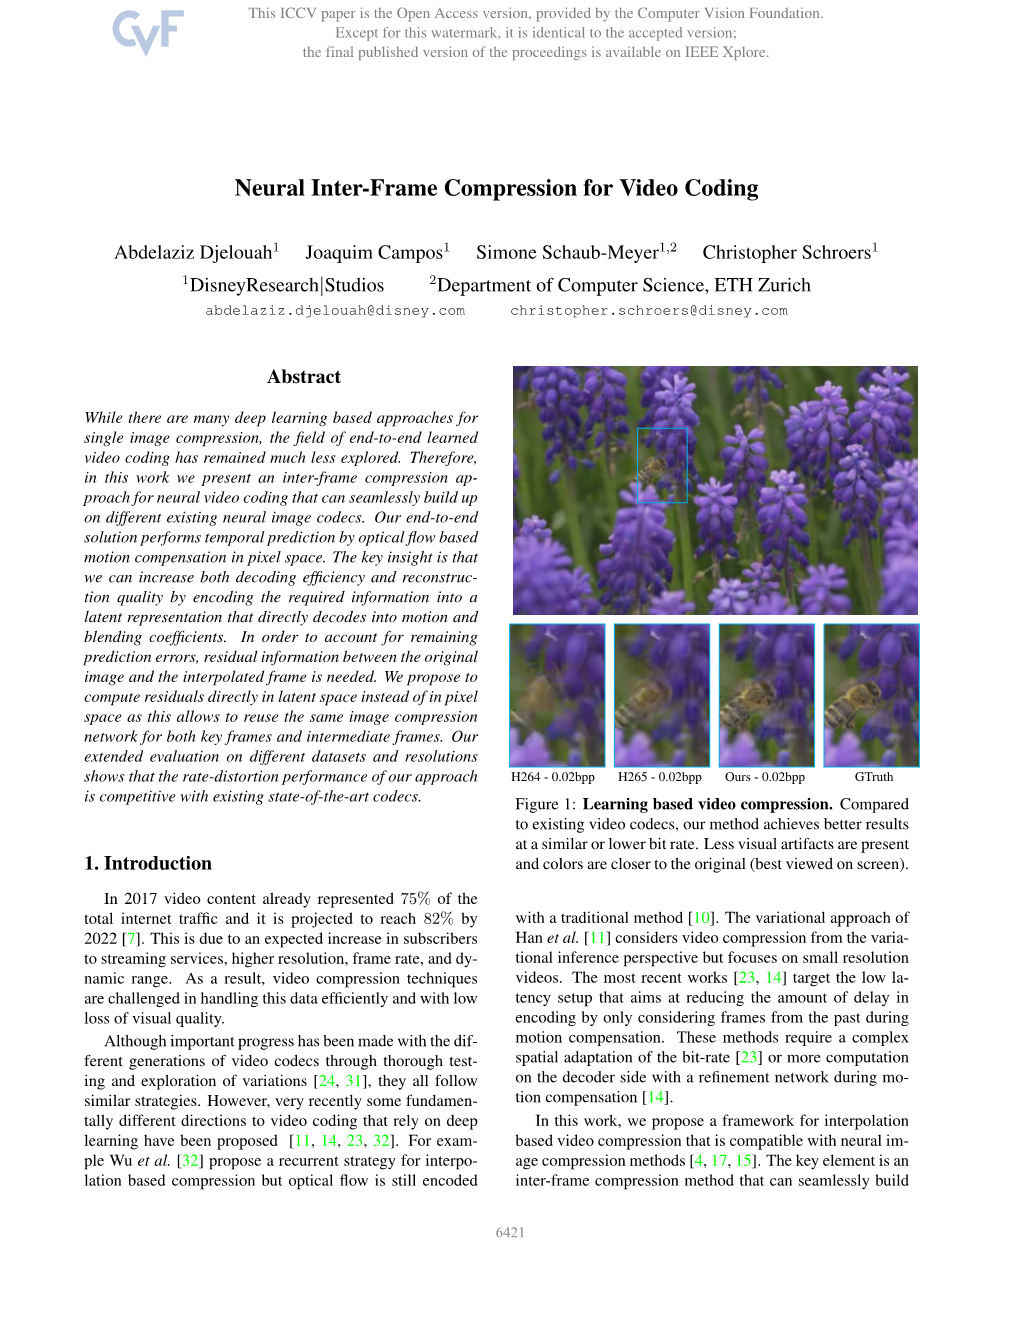 Neural Inter-Frame Compression for Video Coding